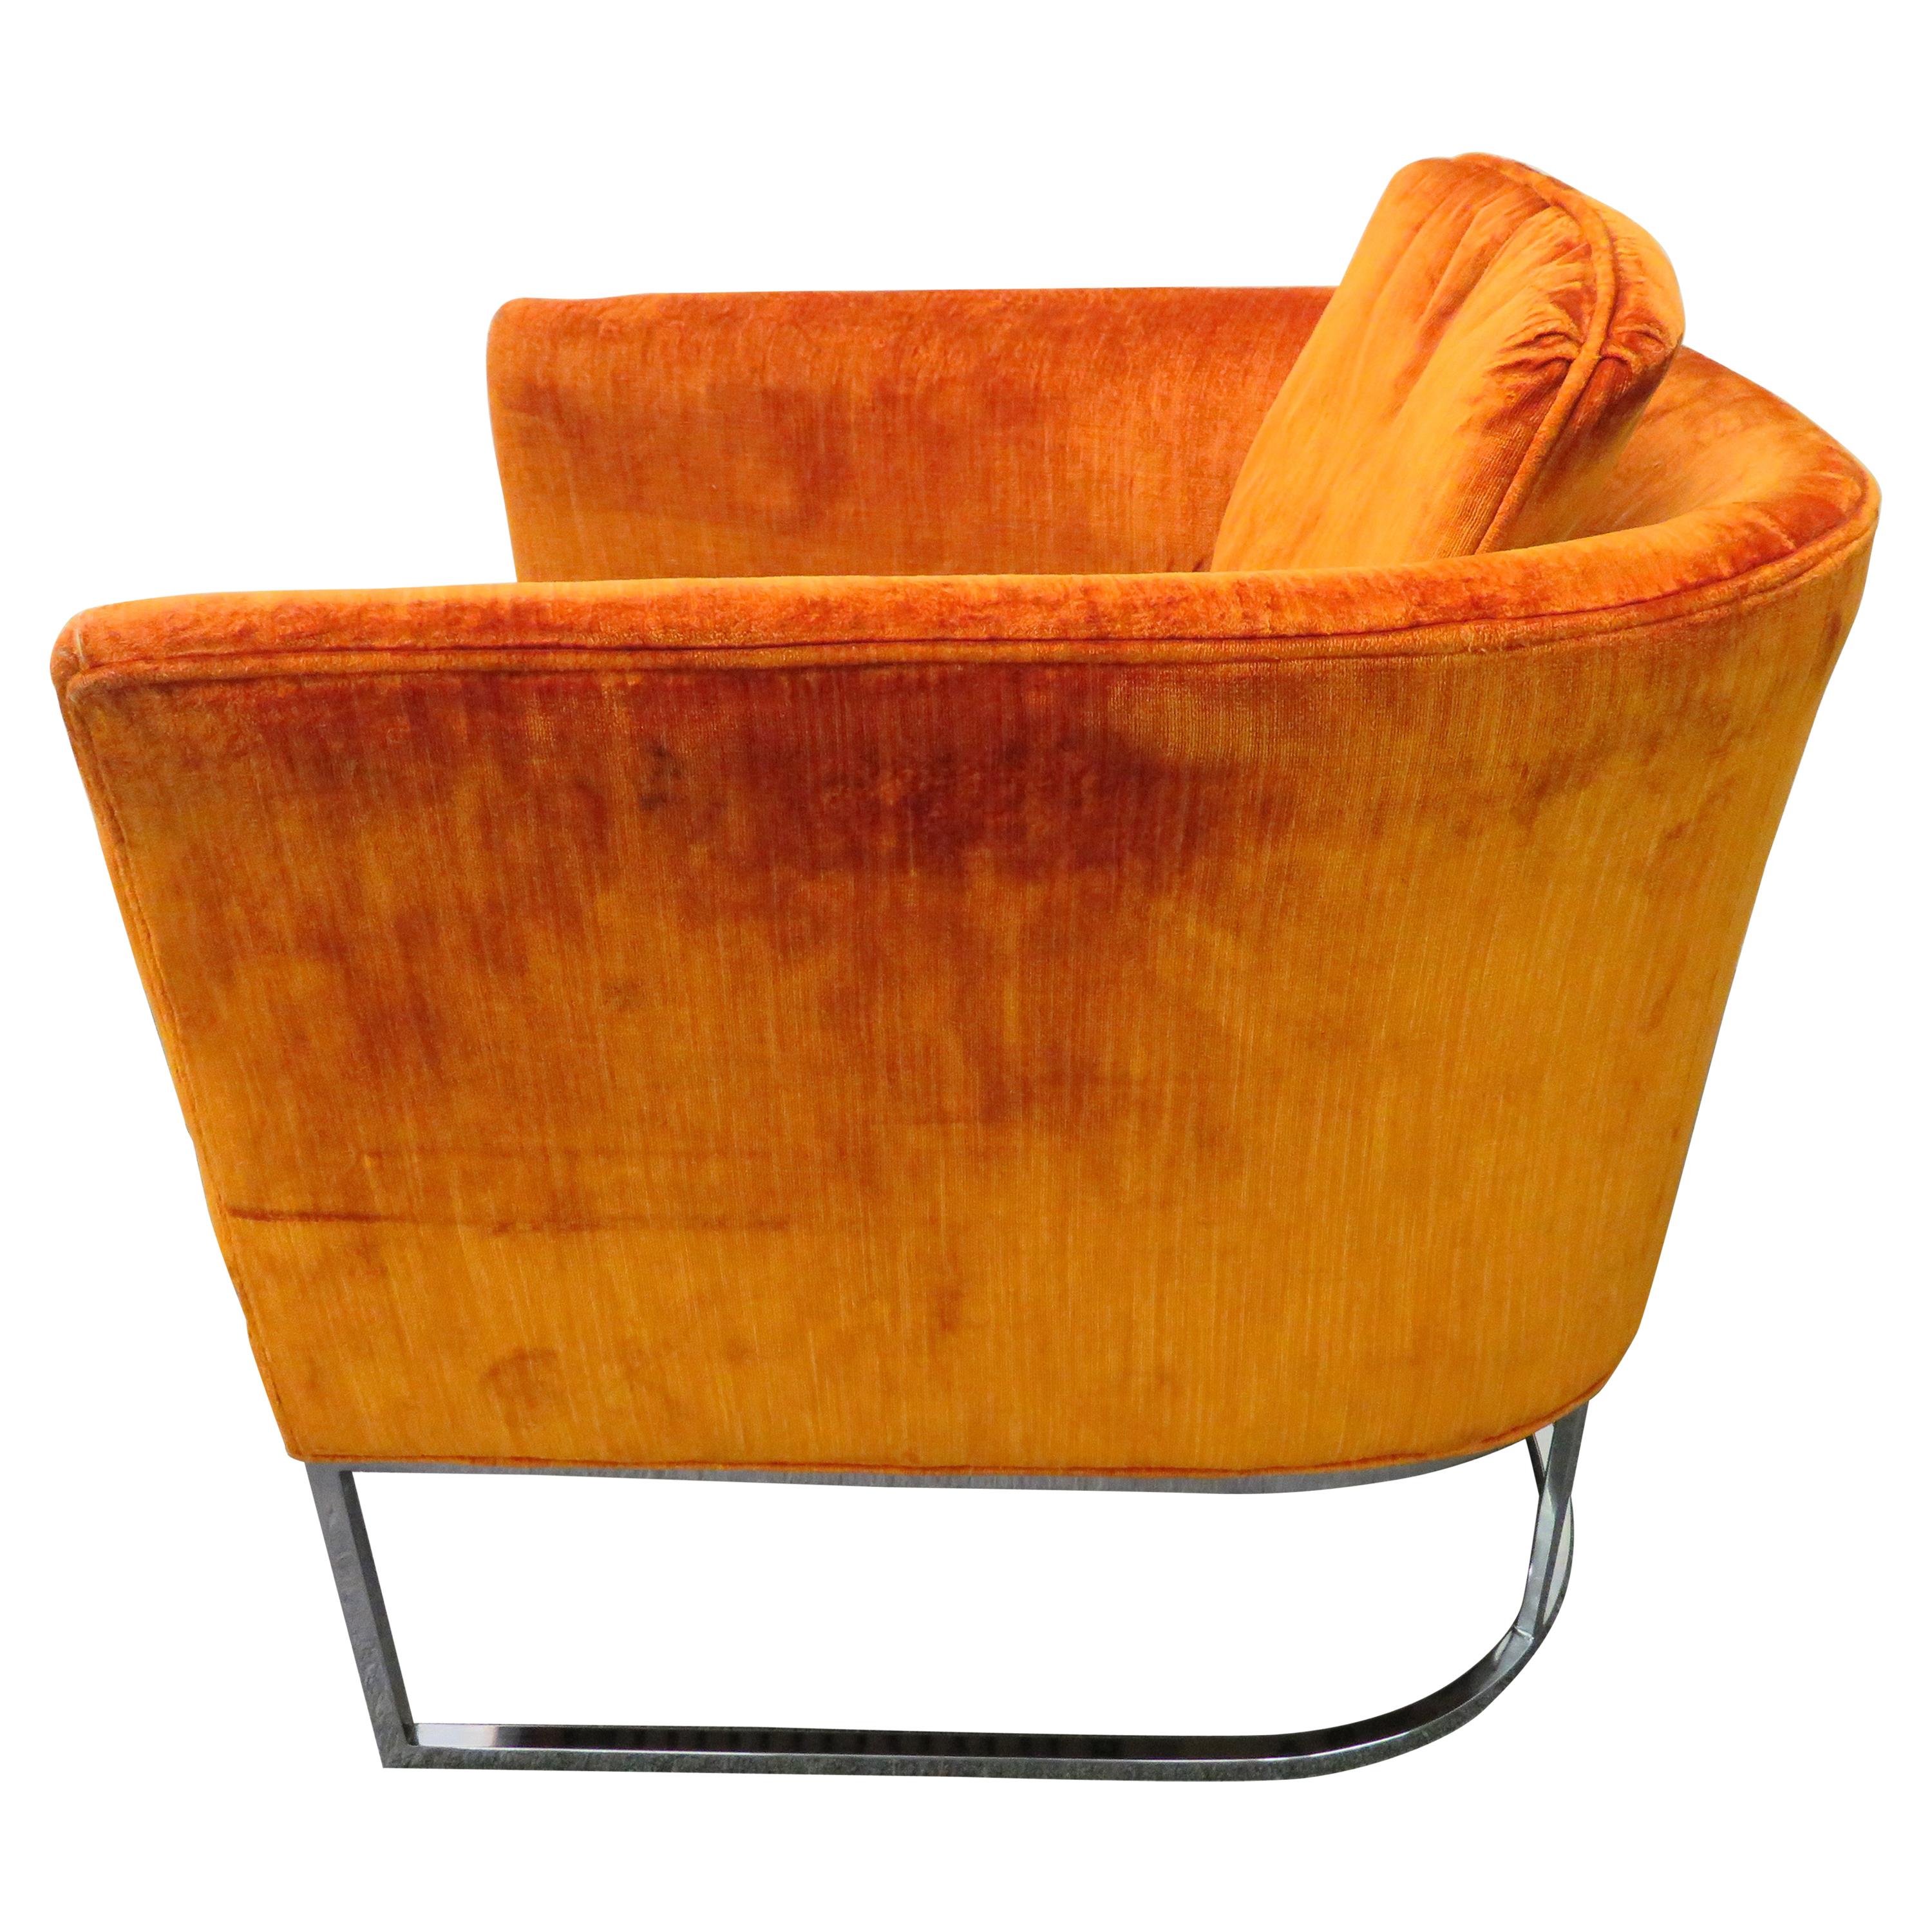 Lovely Milo Baughman Style Chrome Thin Frame Barrel Back Lounge Chair Midcentury